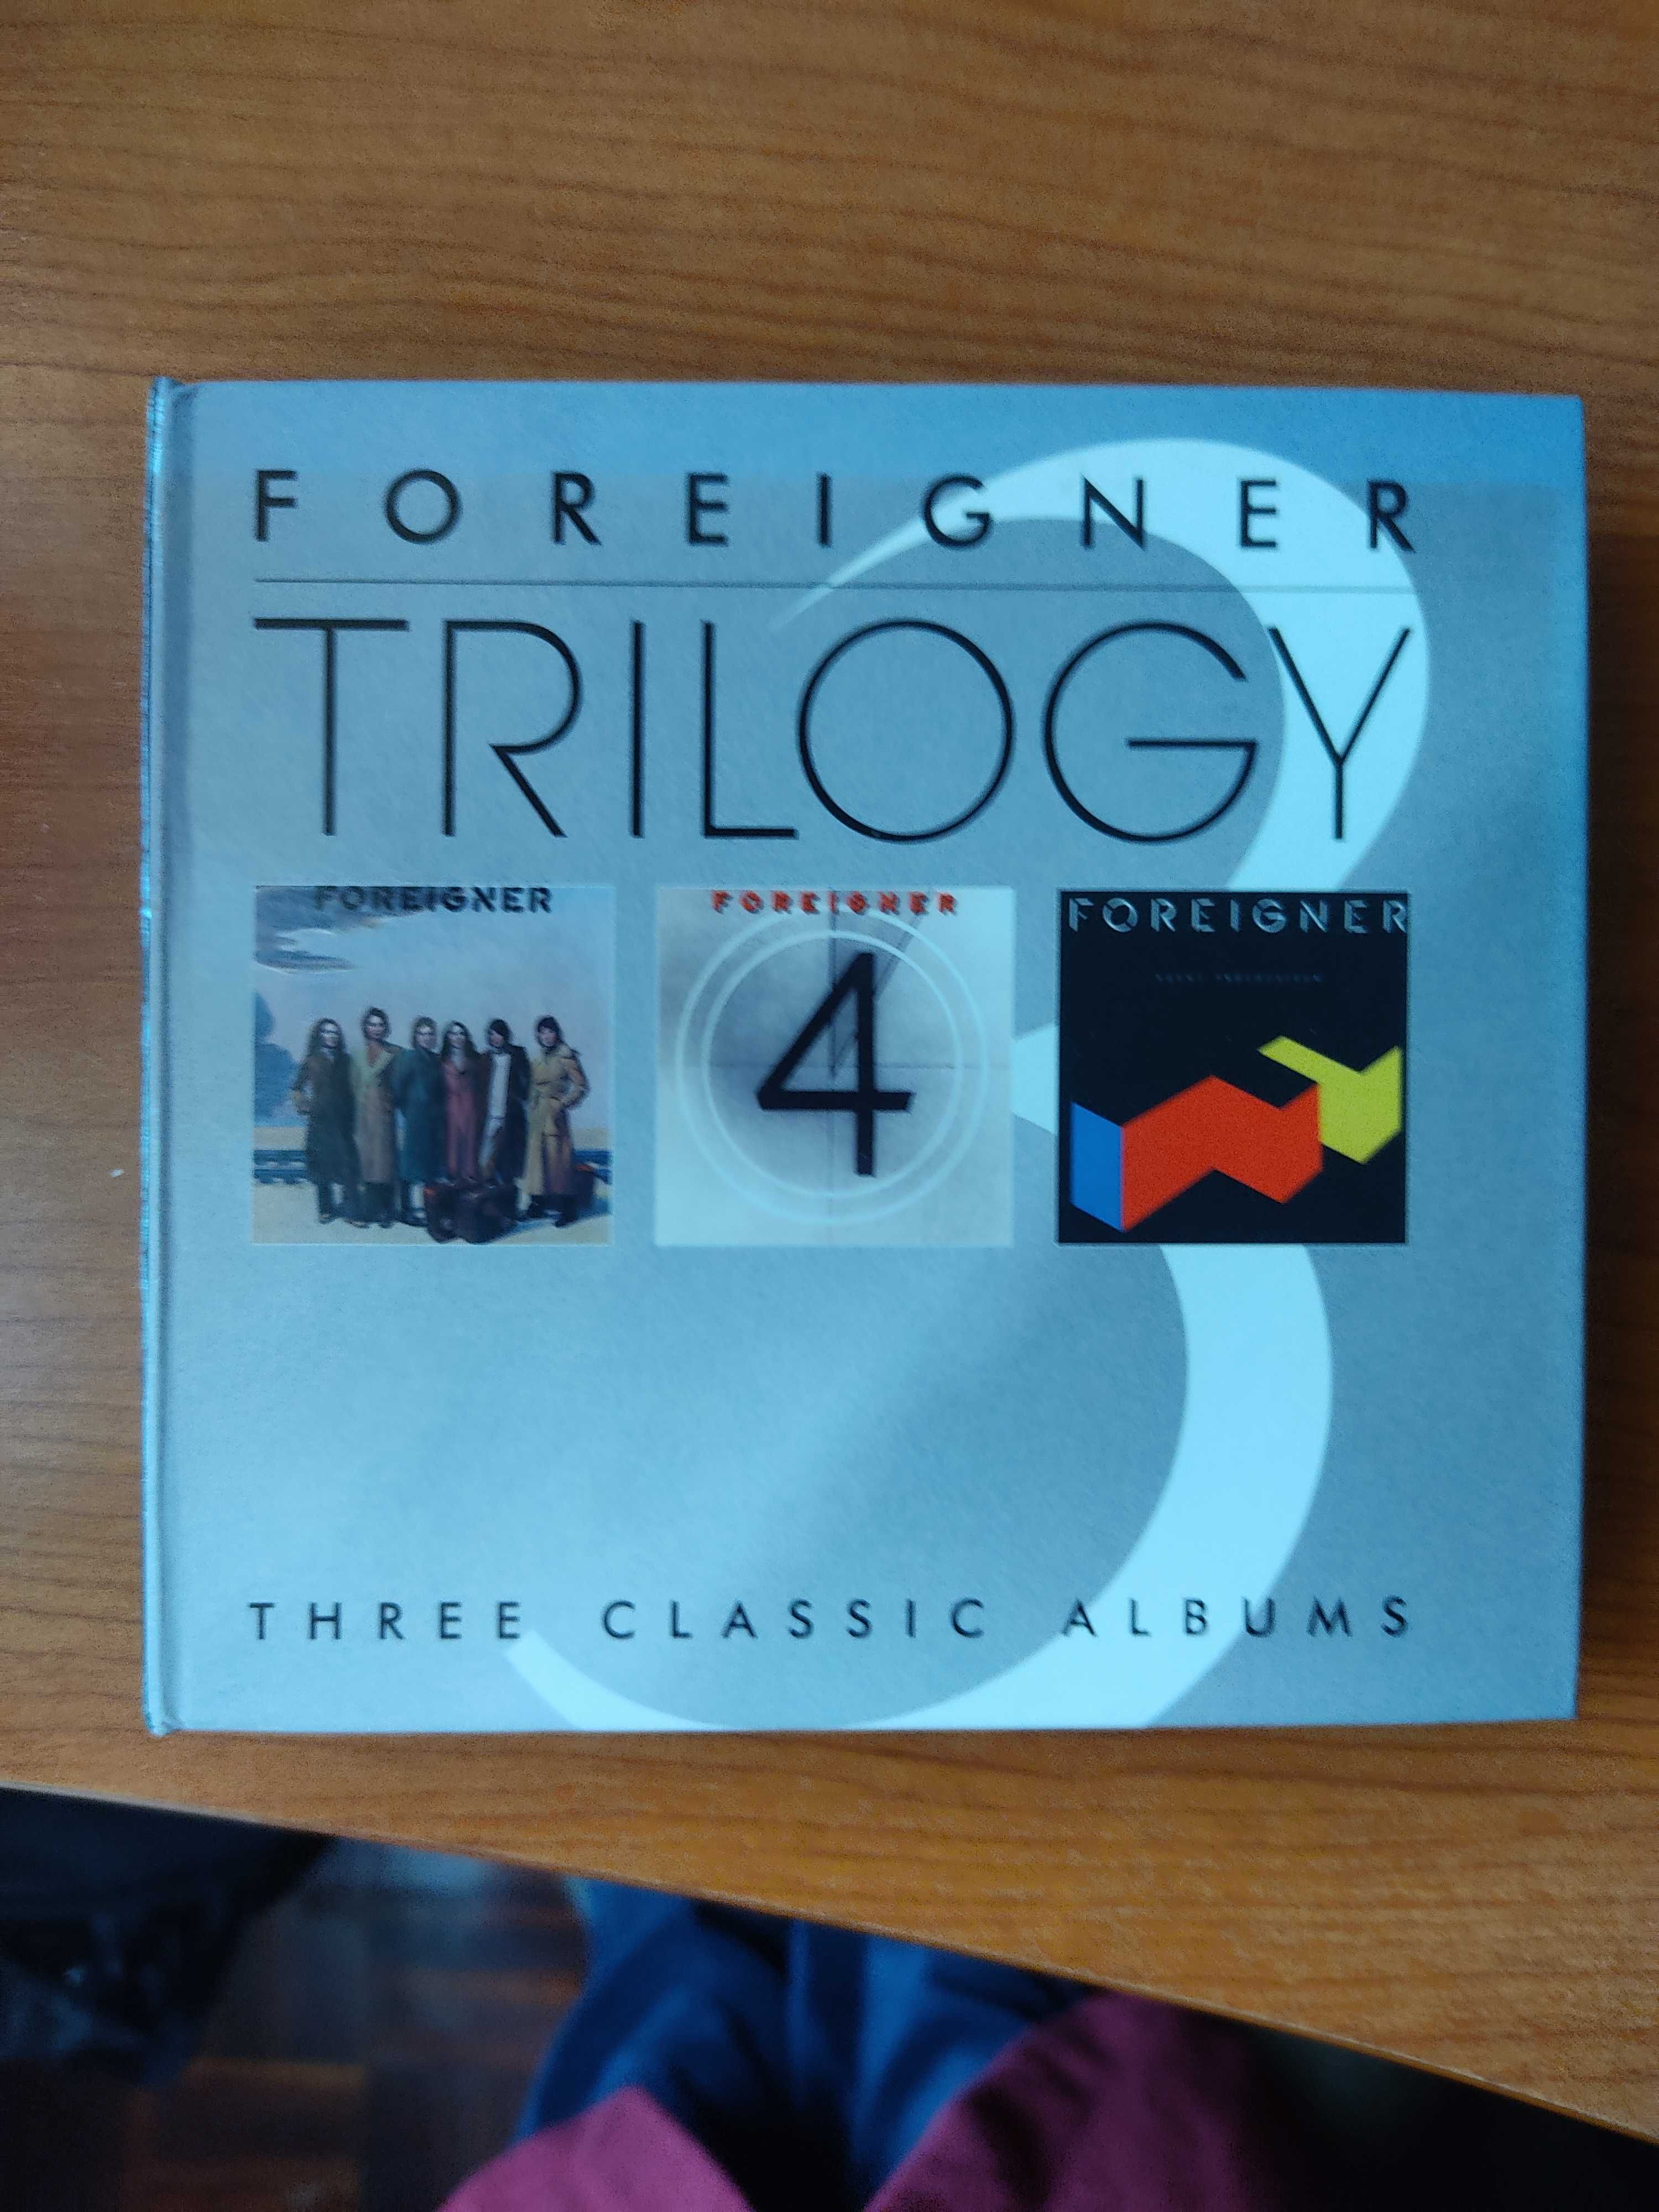 Foreigner - Trilogy